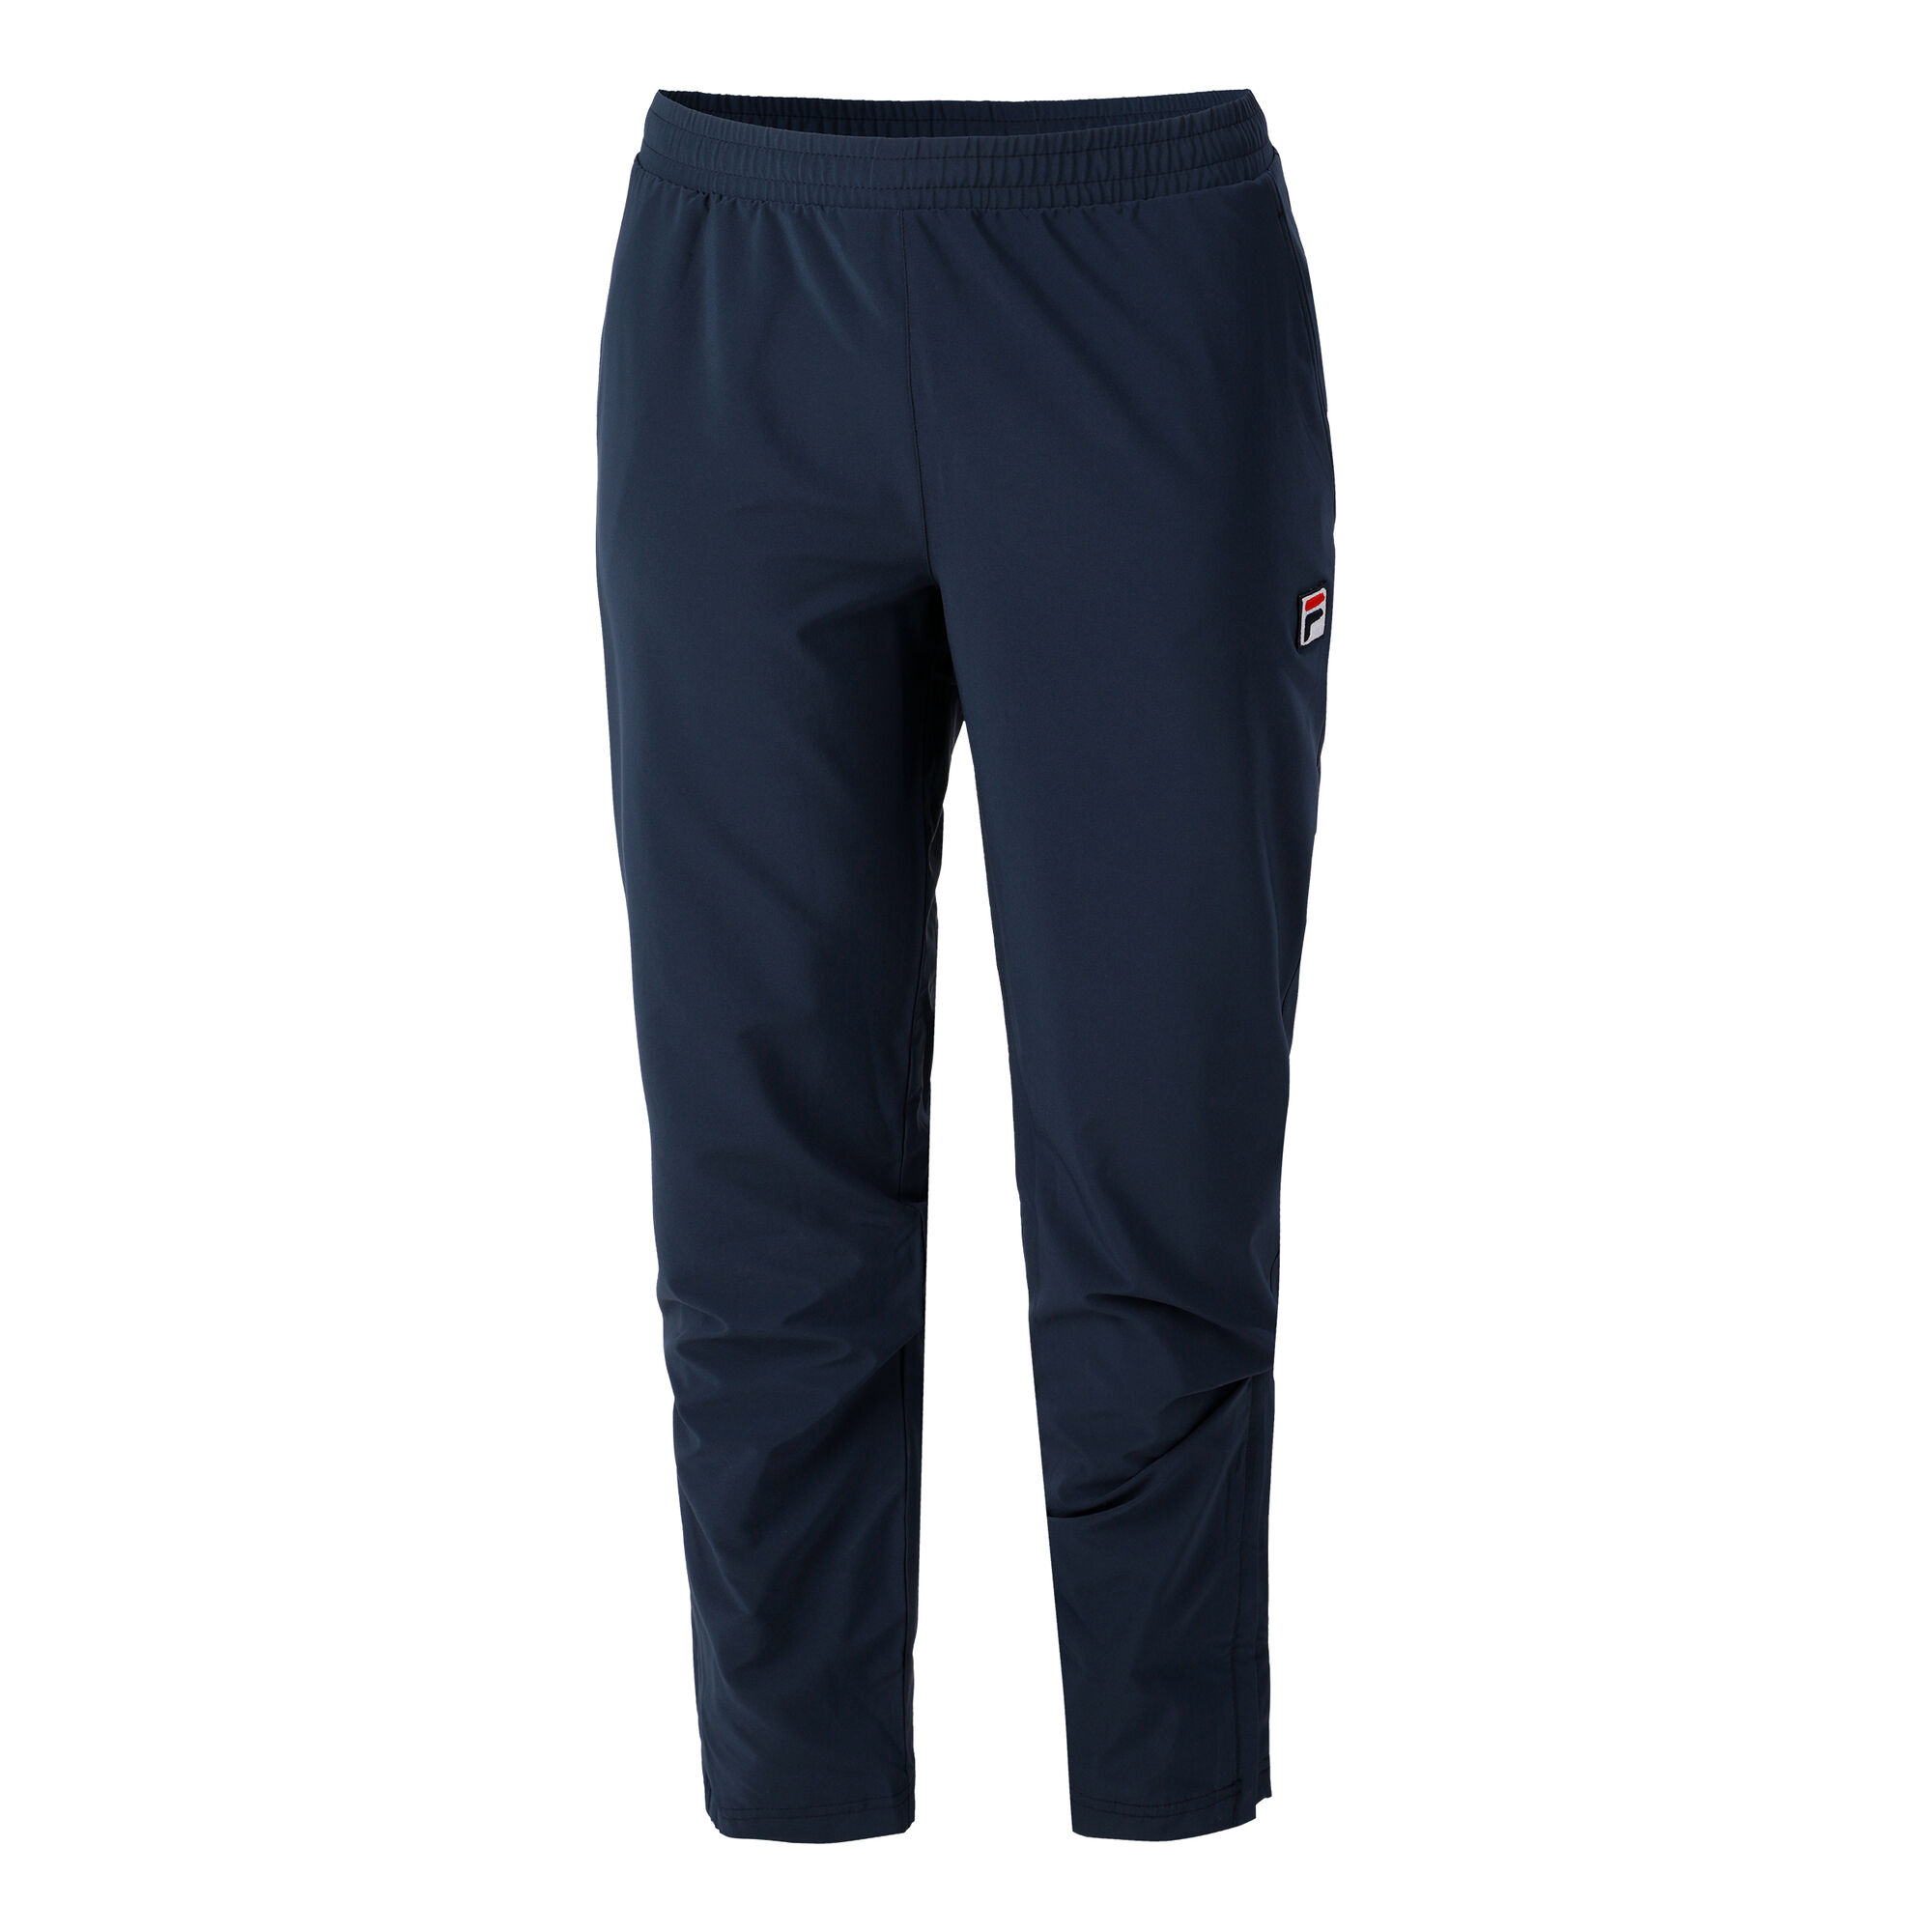 Buy Fila Pro3 Training Pants Men Dark Blue online